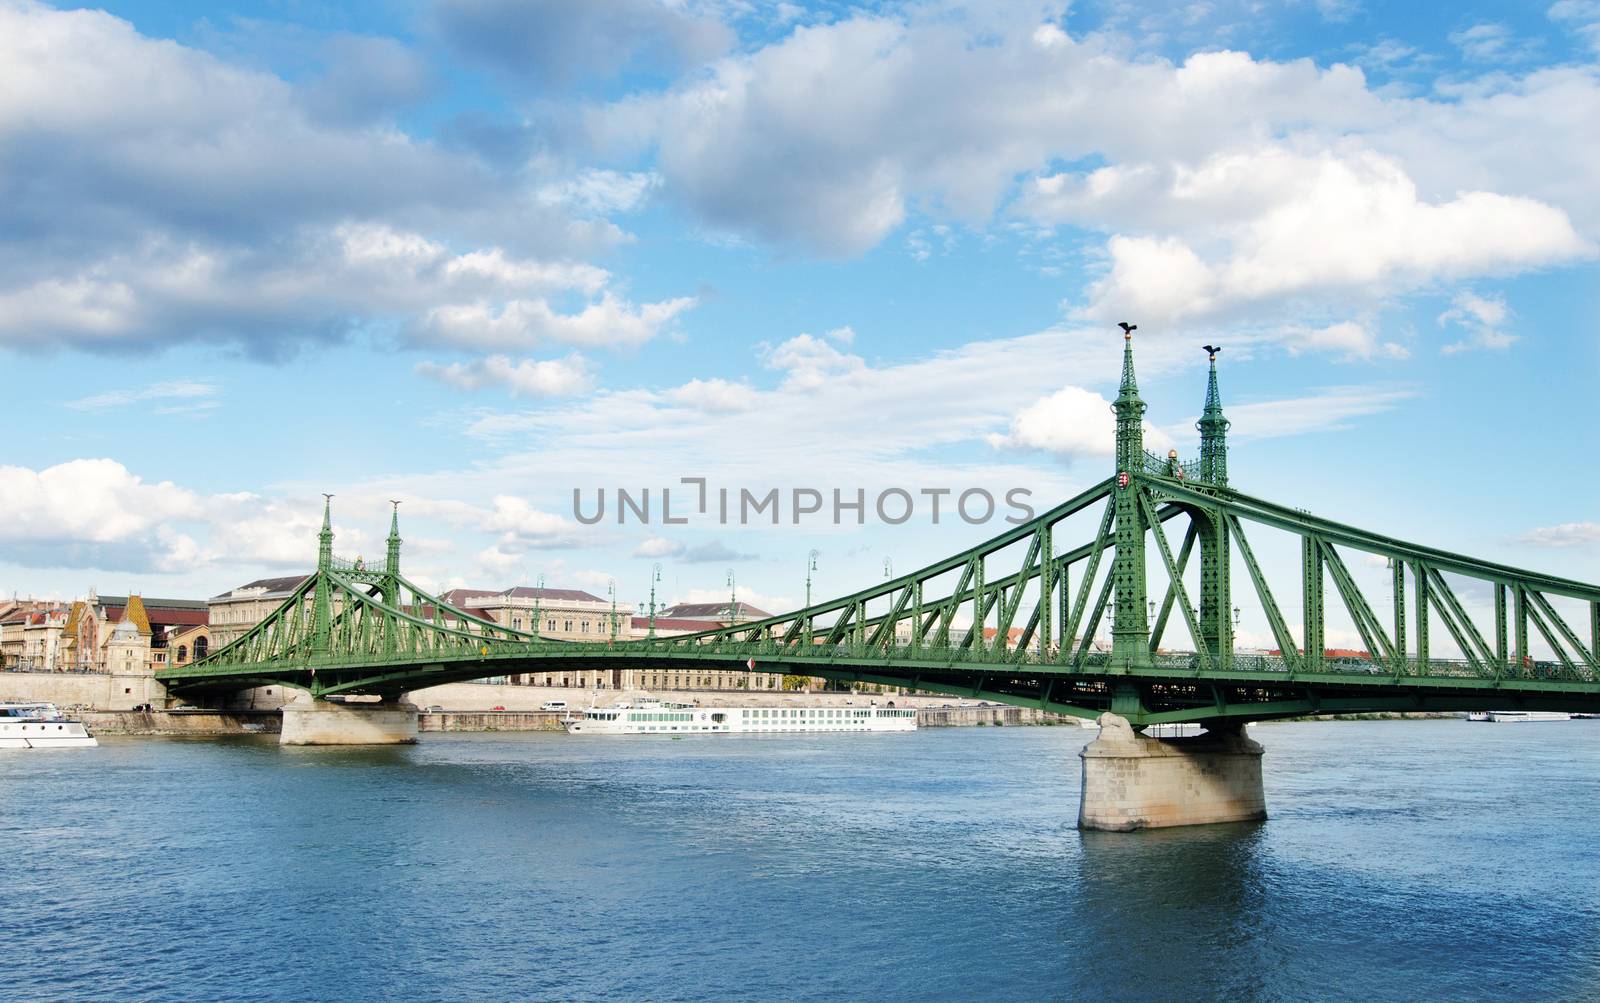 Szabadság hid - Liberty bridge in Budapest, Hungary by sarkao